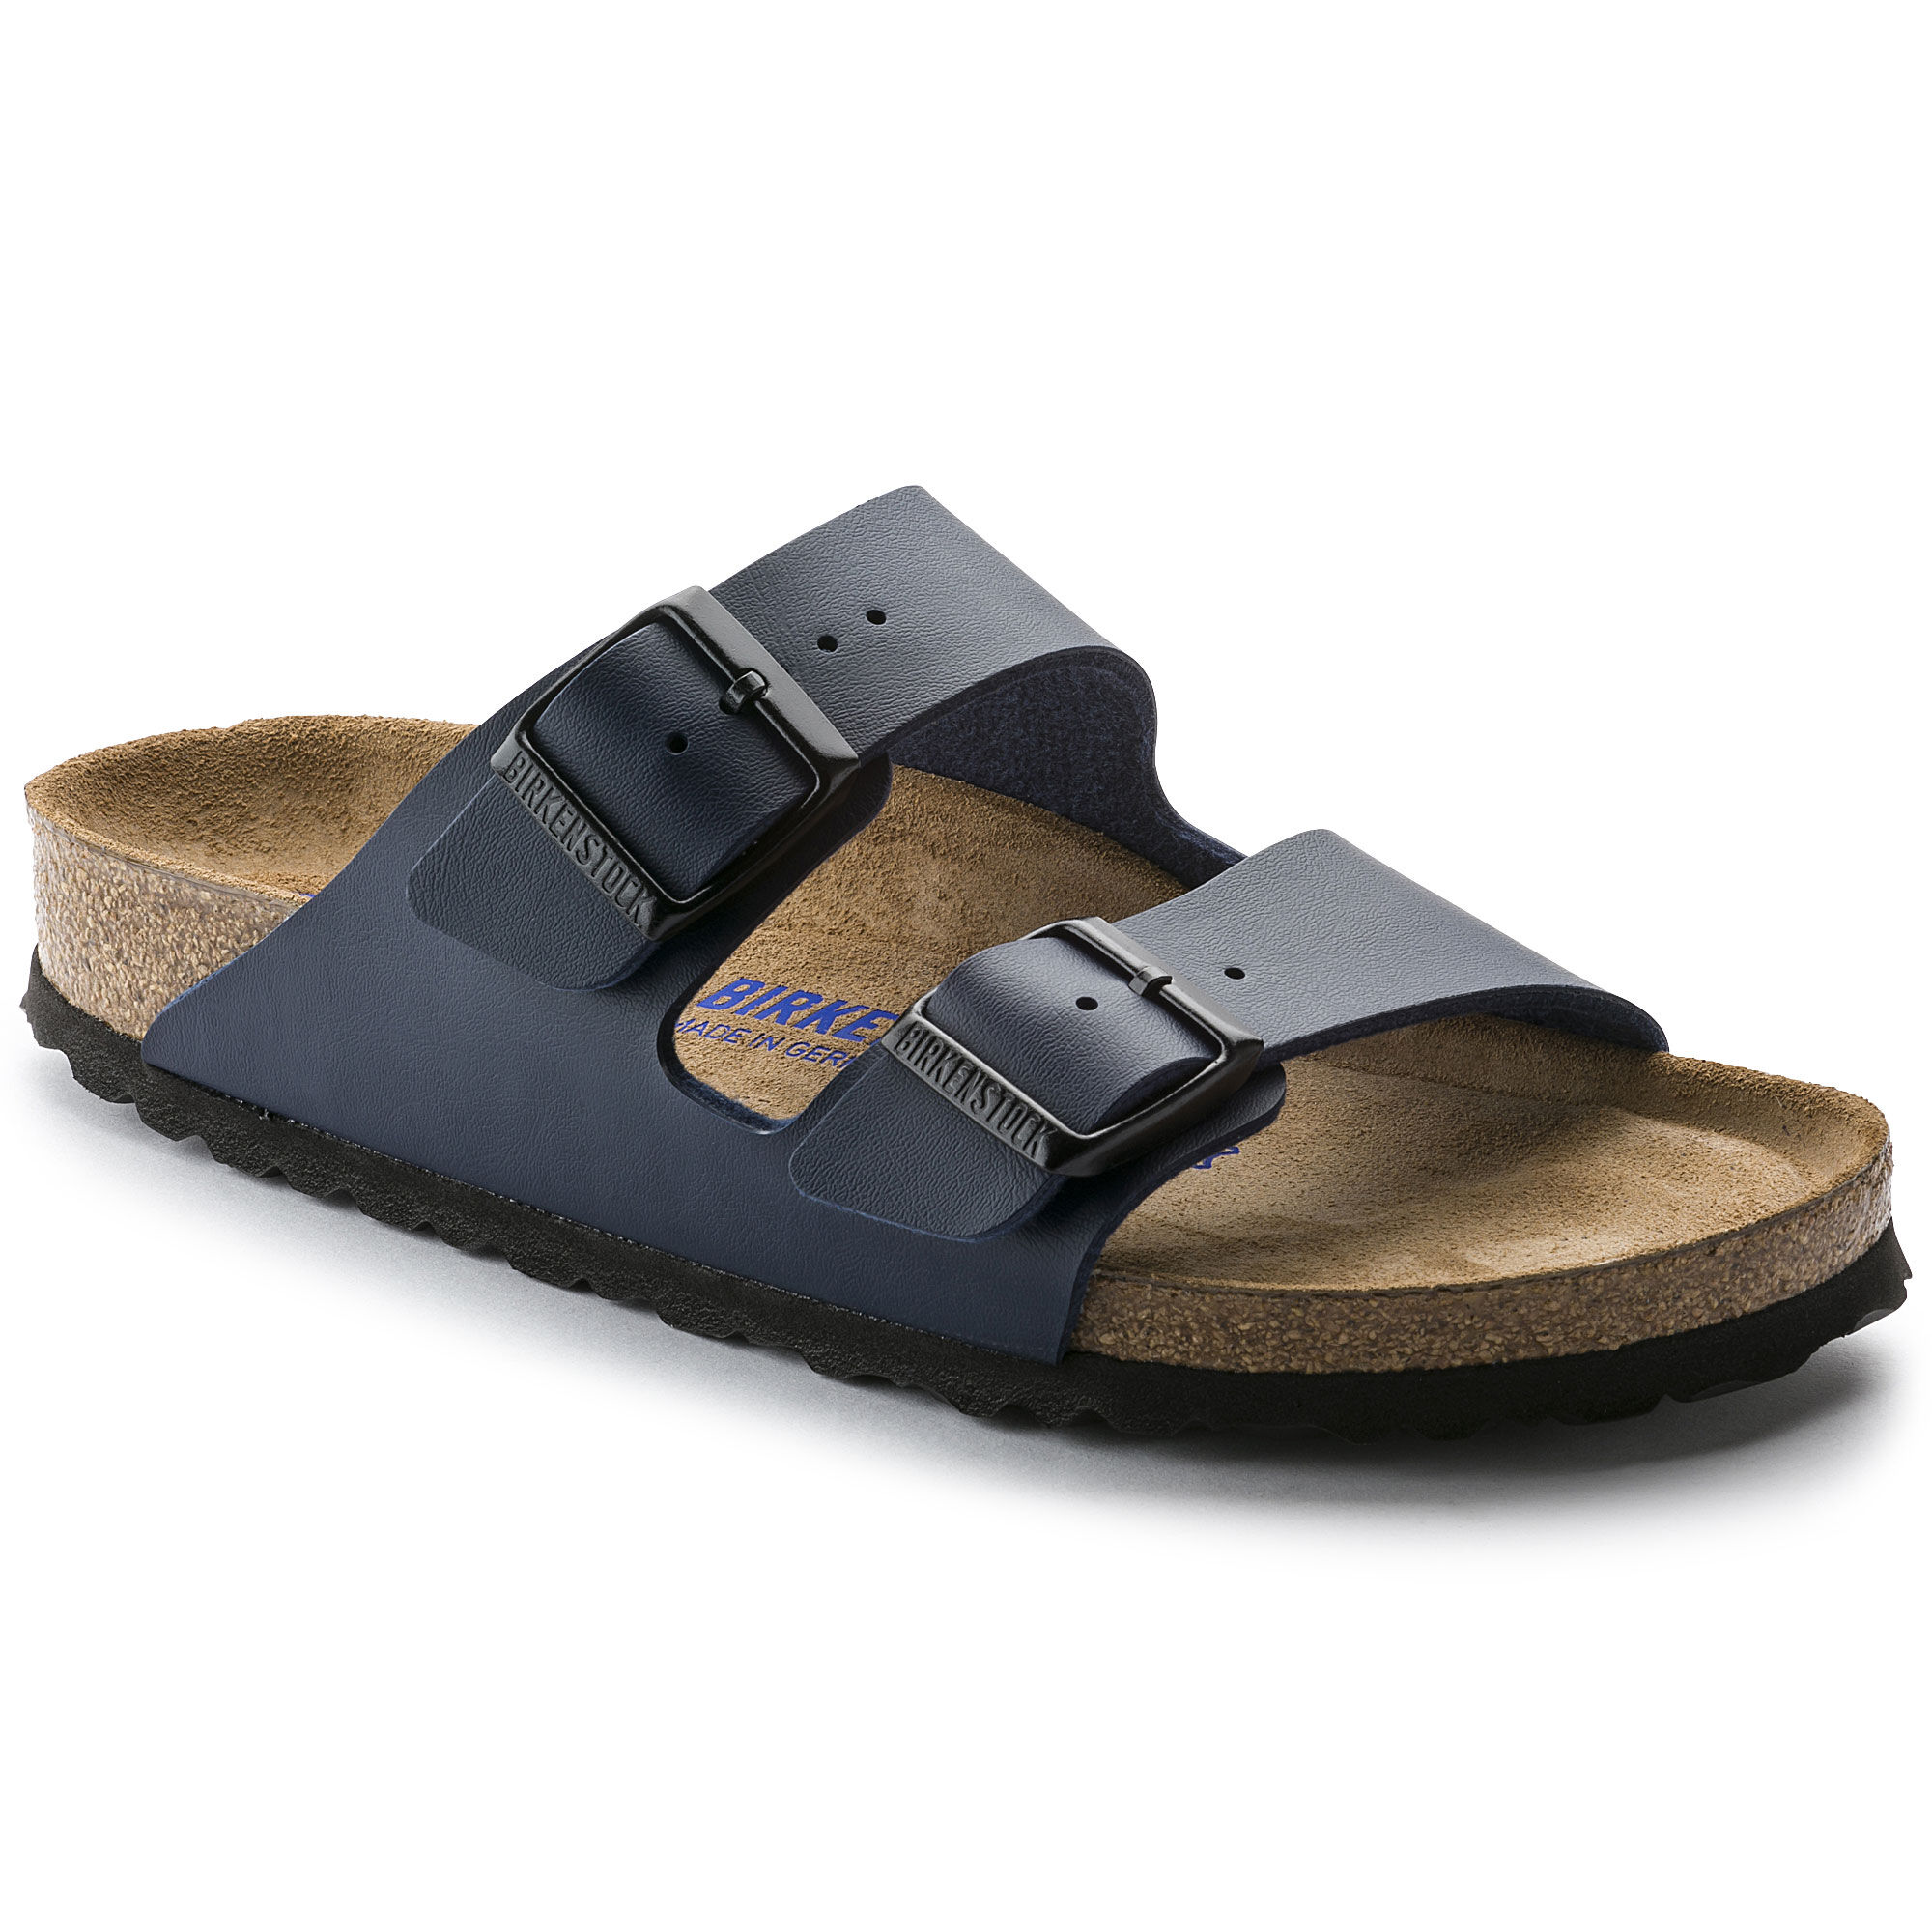 Men's two-strap sandals | BIRKENSTOCK.com